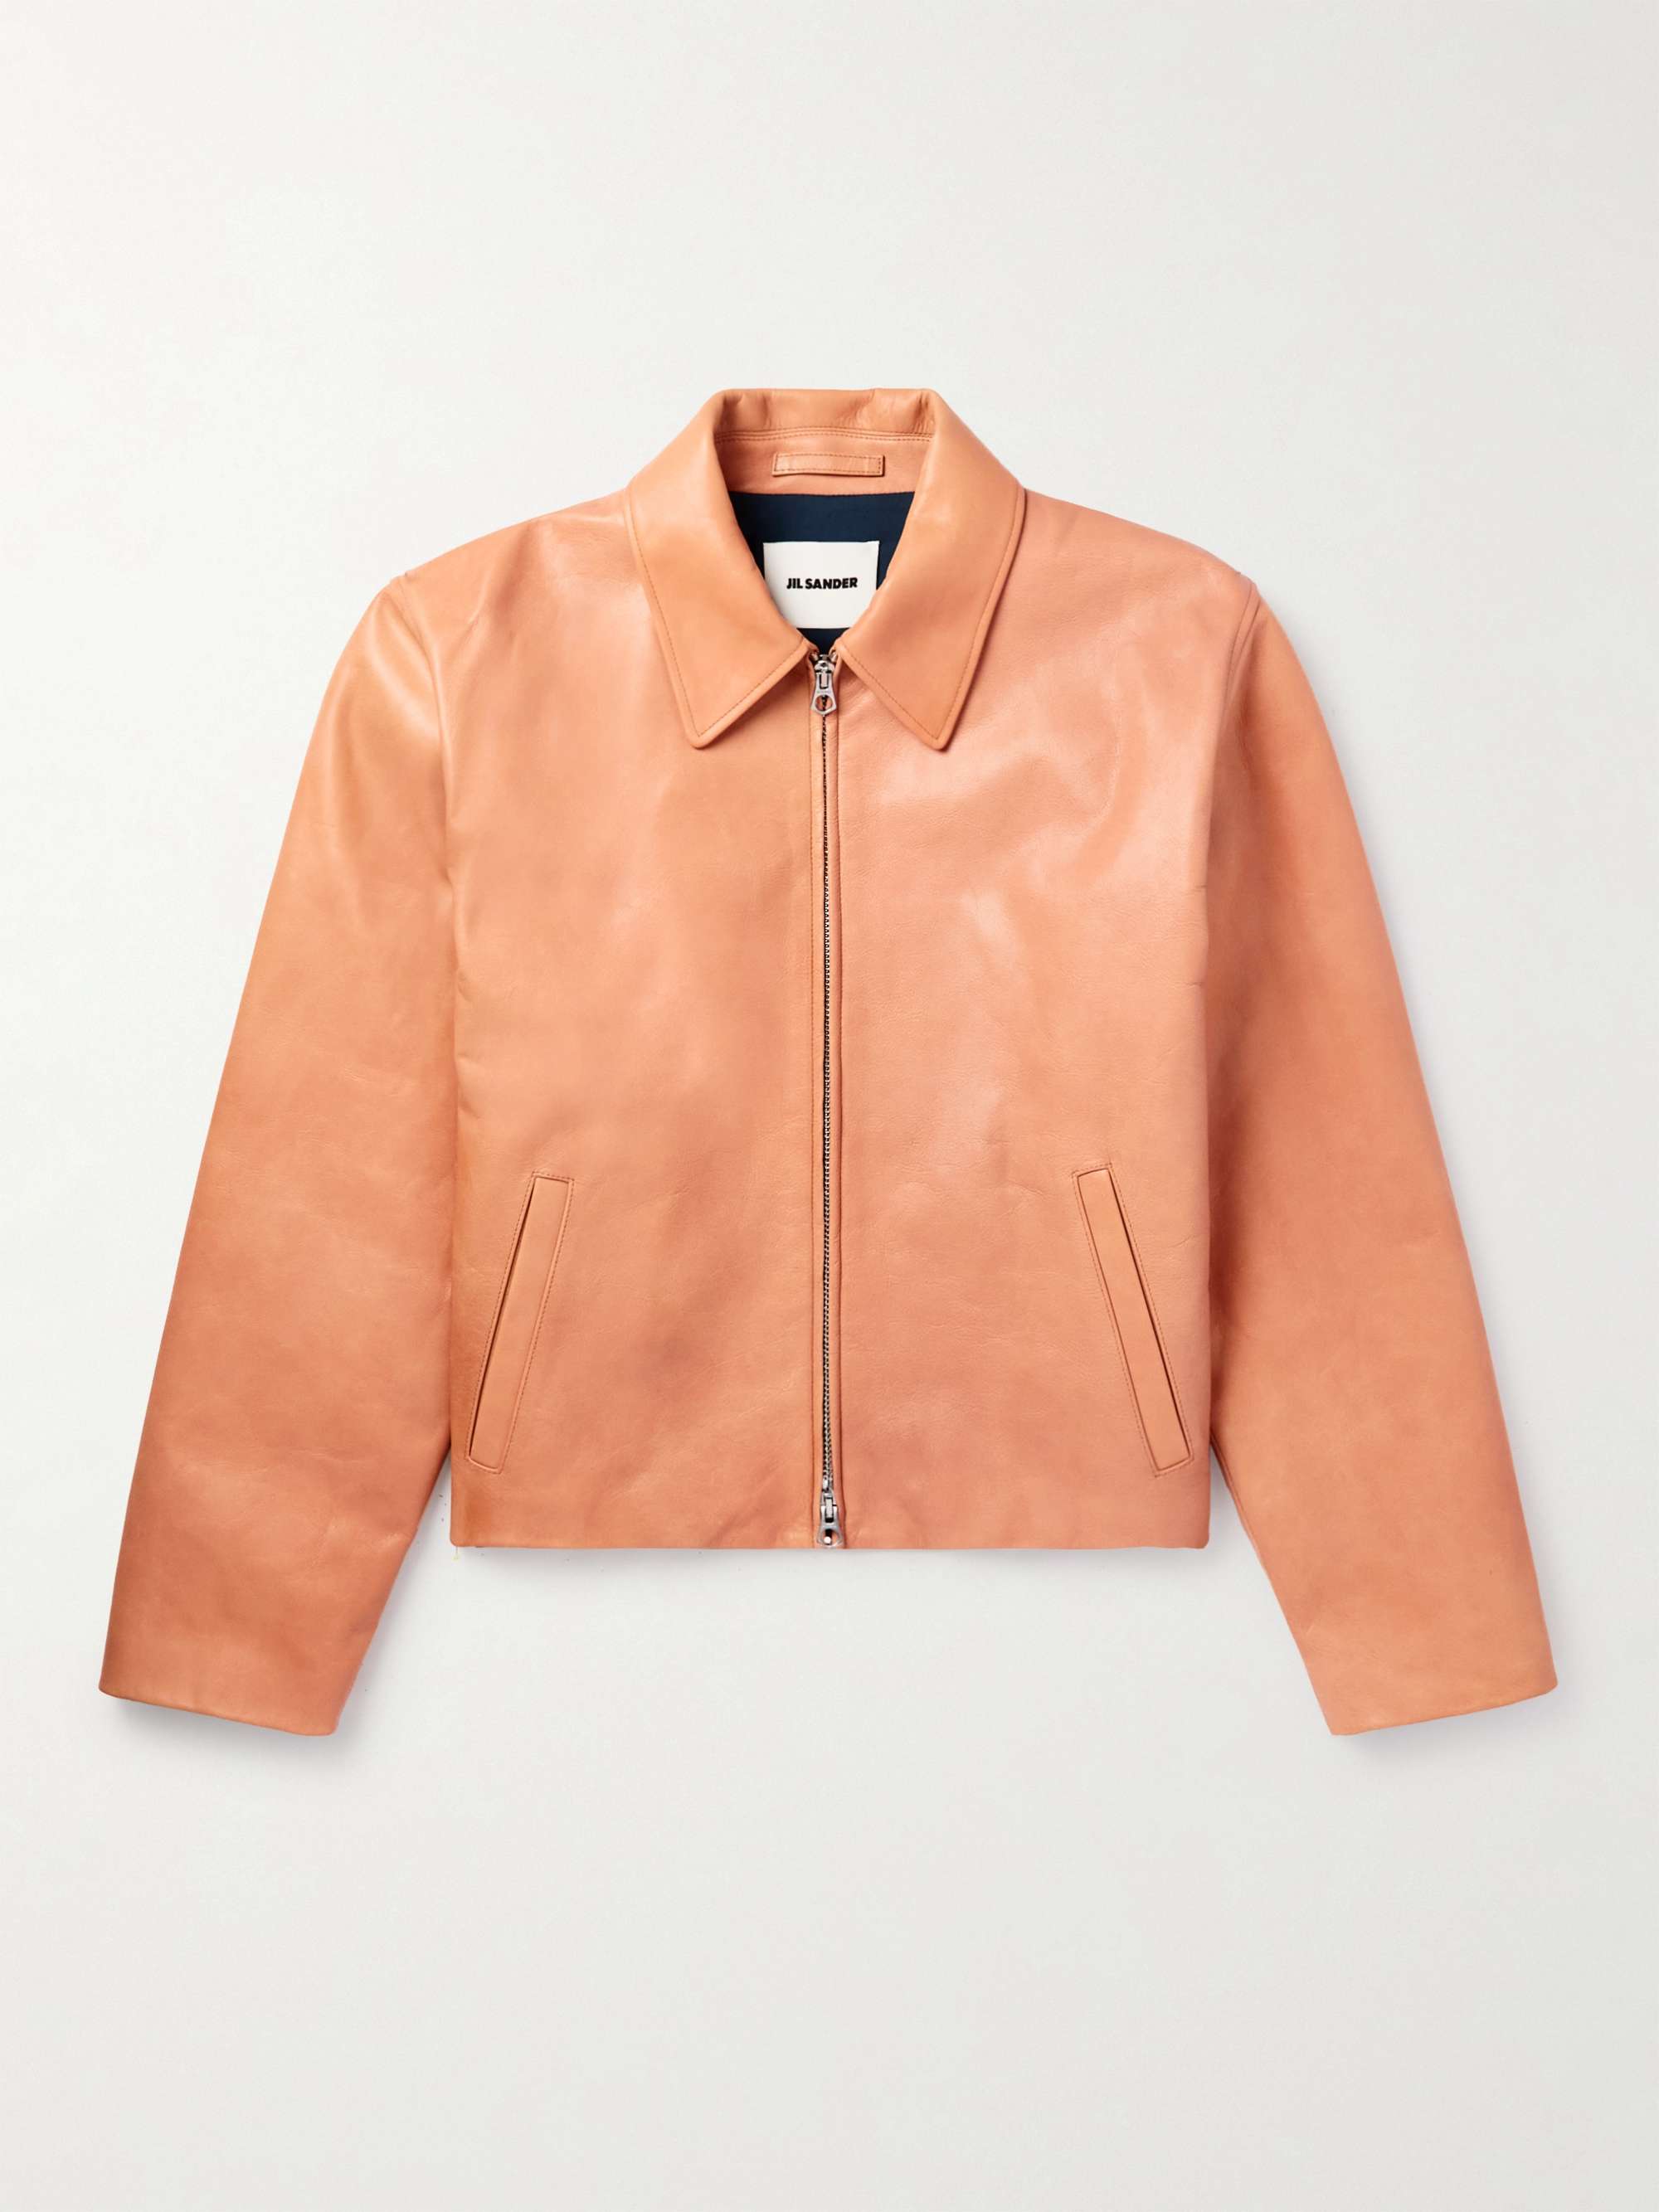 JIL SANDER Leather Blouson Jacket